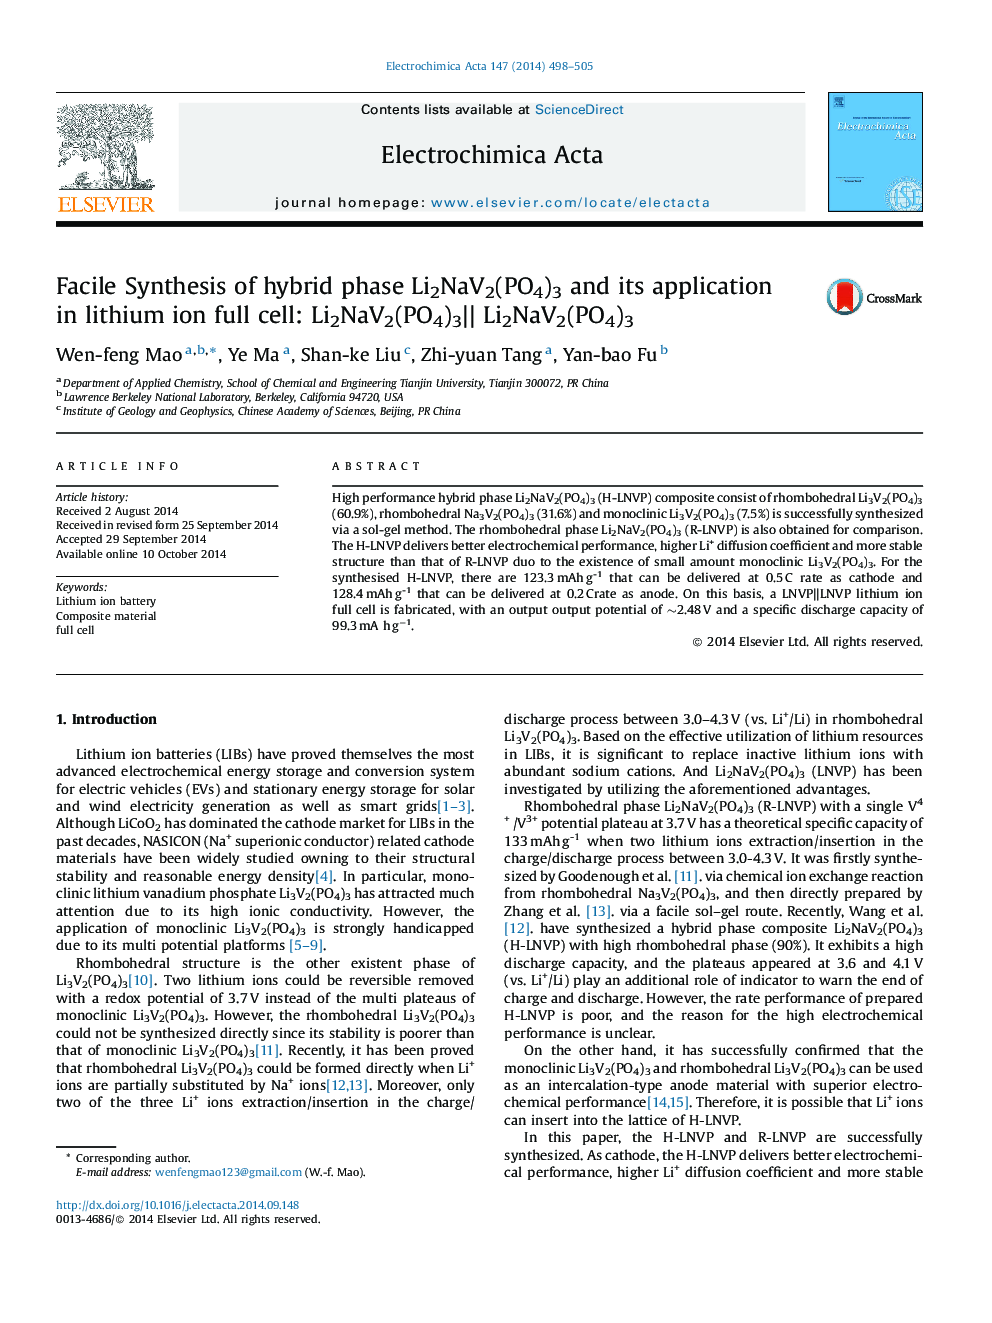 Facile Synthesis of hybrid phase Li2NaV2(PO4)3 and its application in lithium ion full cell: Li2NaV2(PO4)3|| Li2NaV2(PO4)3